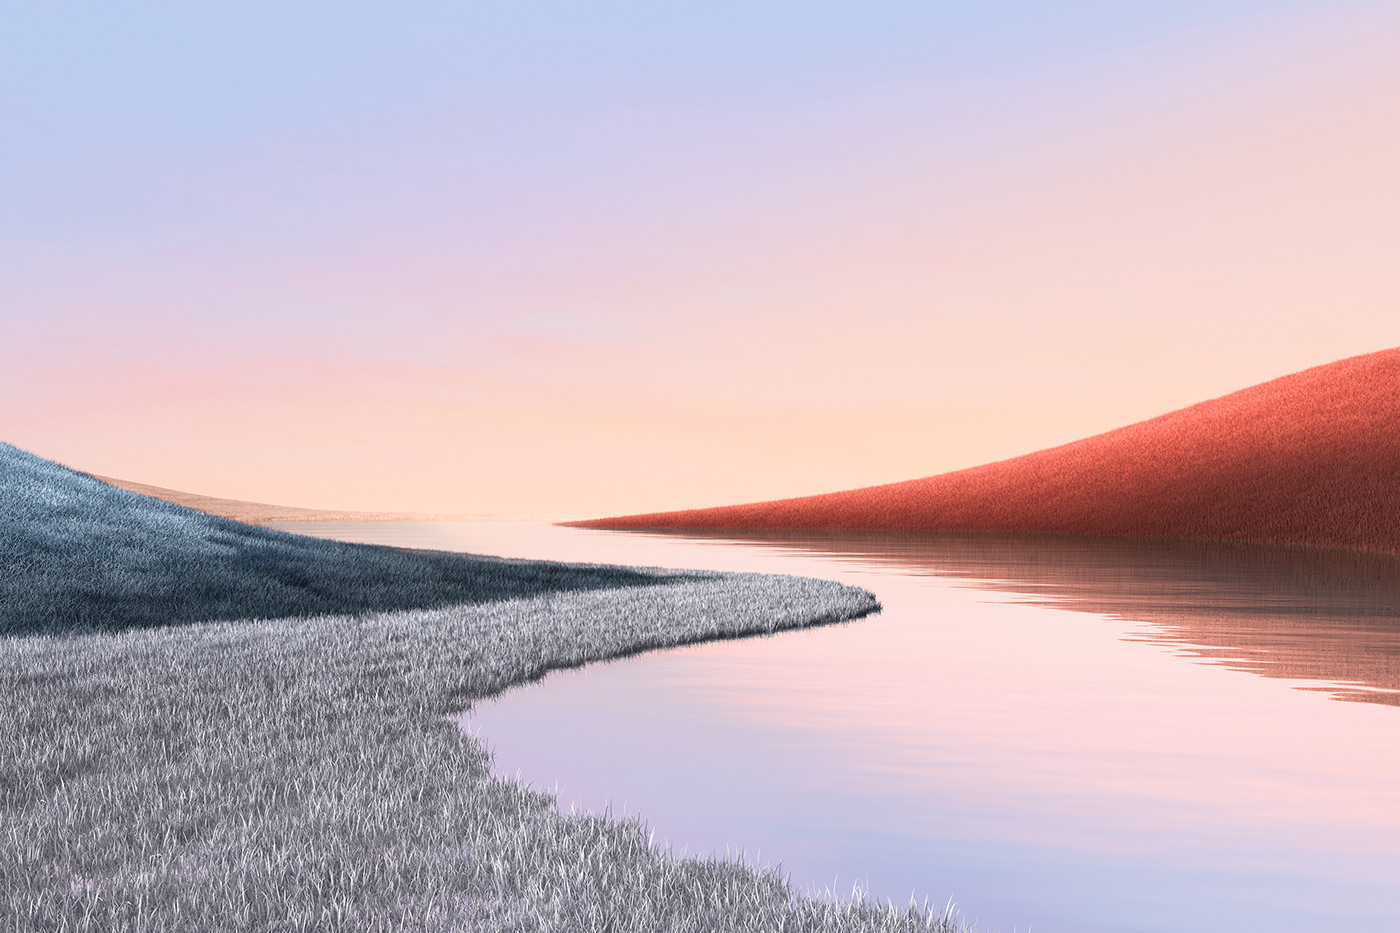 design Landscape wallpaper backgrounds art digital CGI graphics digital illustration sixnfive